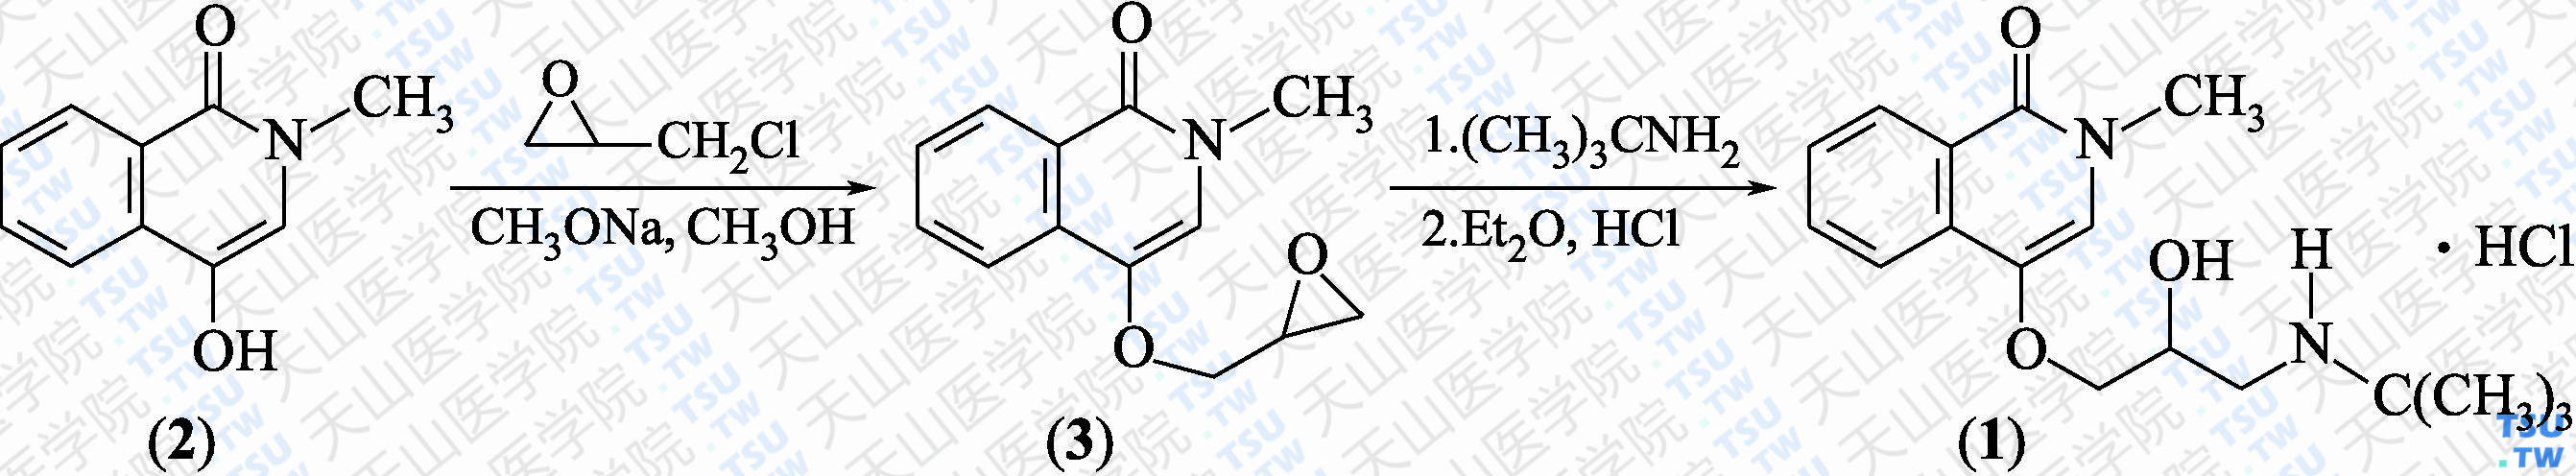 盐酸替利洛尔（分子式：C<sub>17</sub>H<sub>24</sub>N<sub>2</sub>O<sub>3</sub>·HCl）的合成方法路线及其结构式